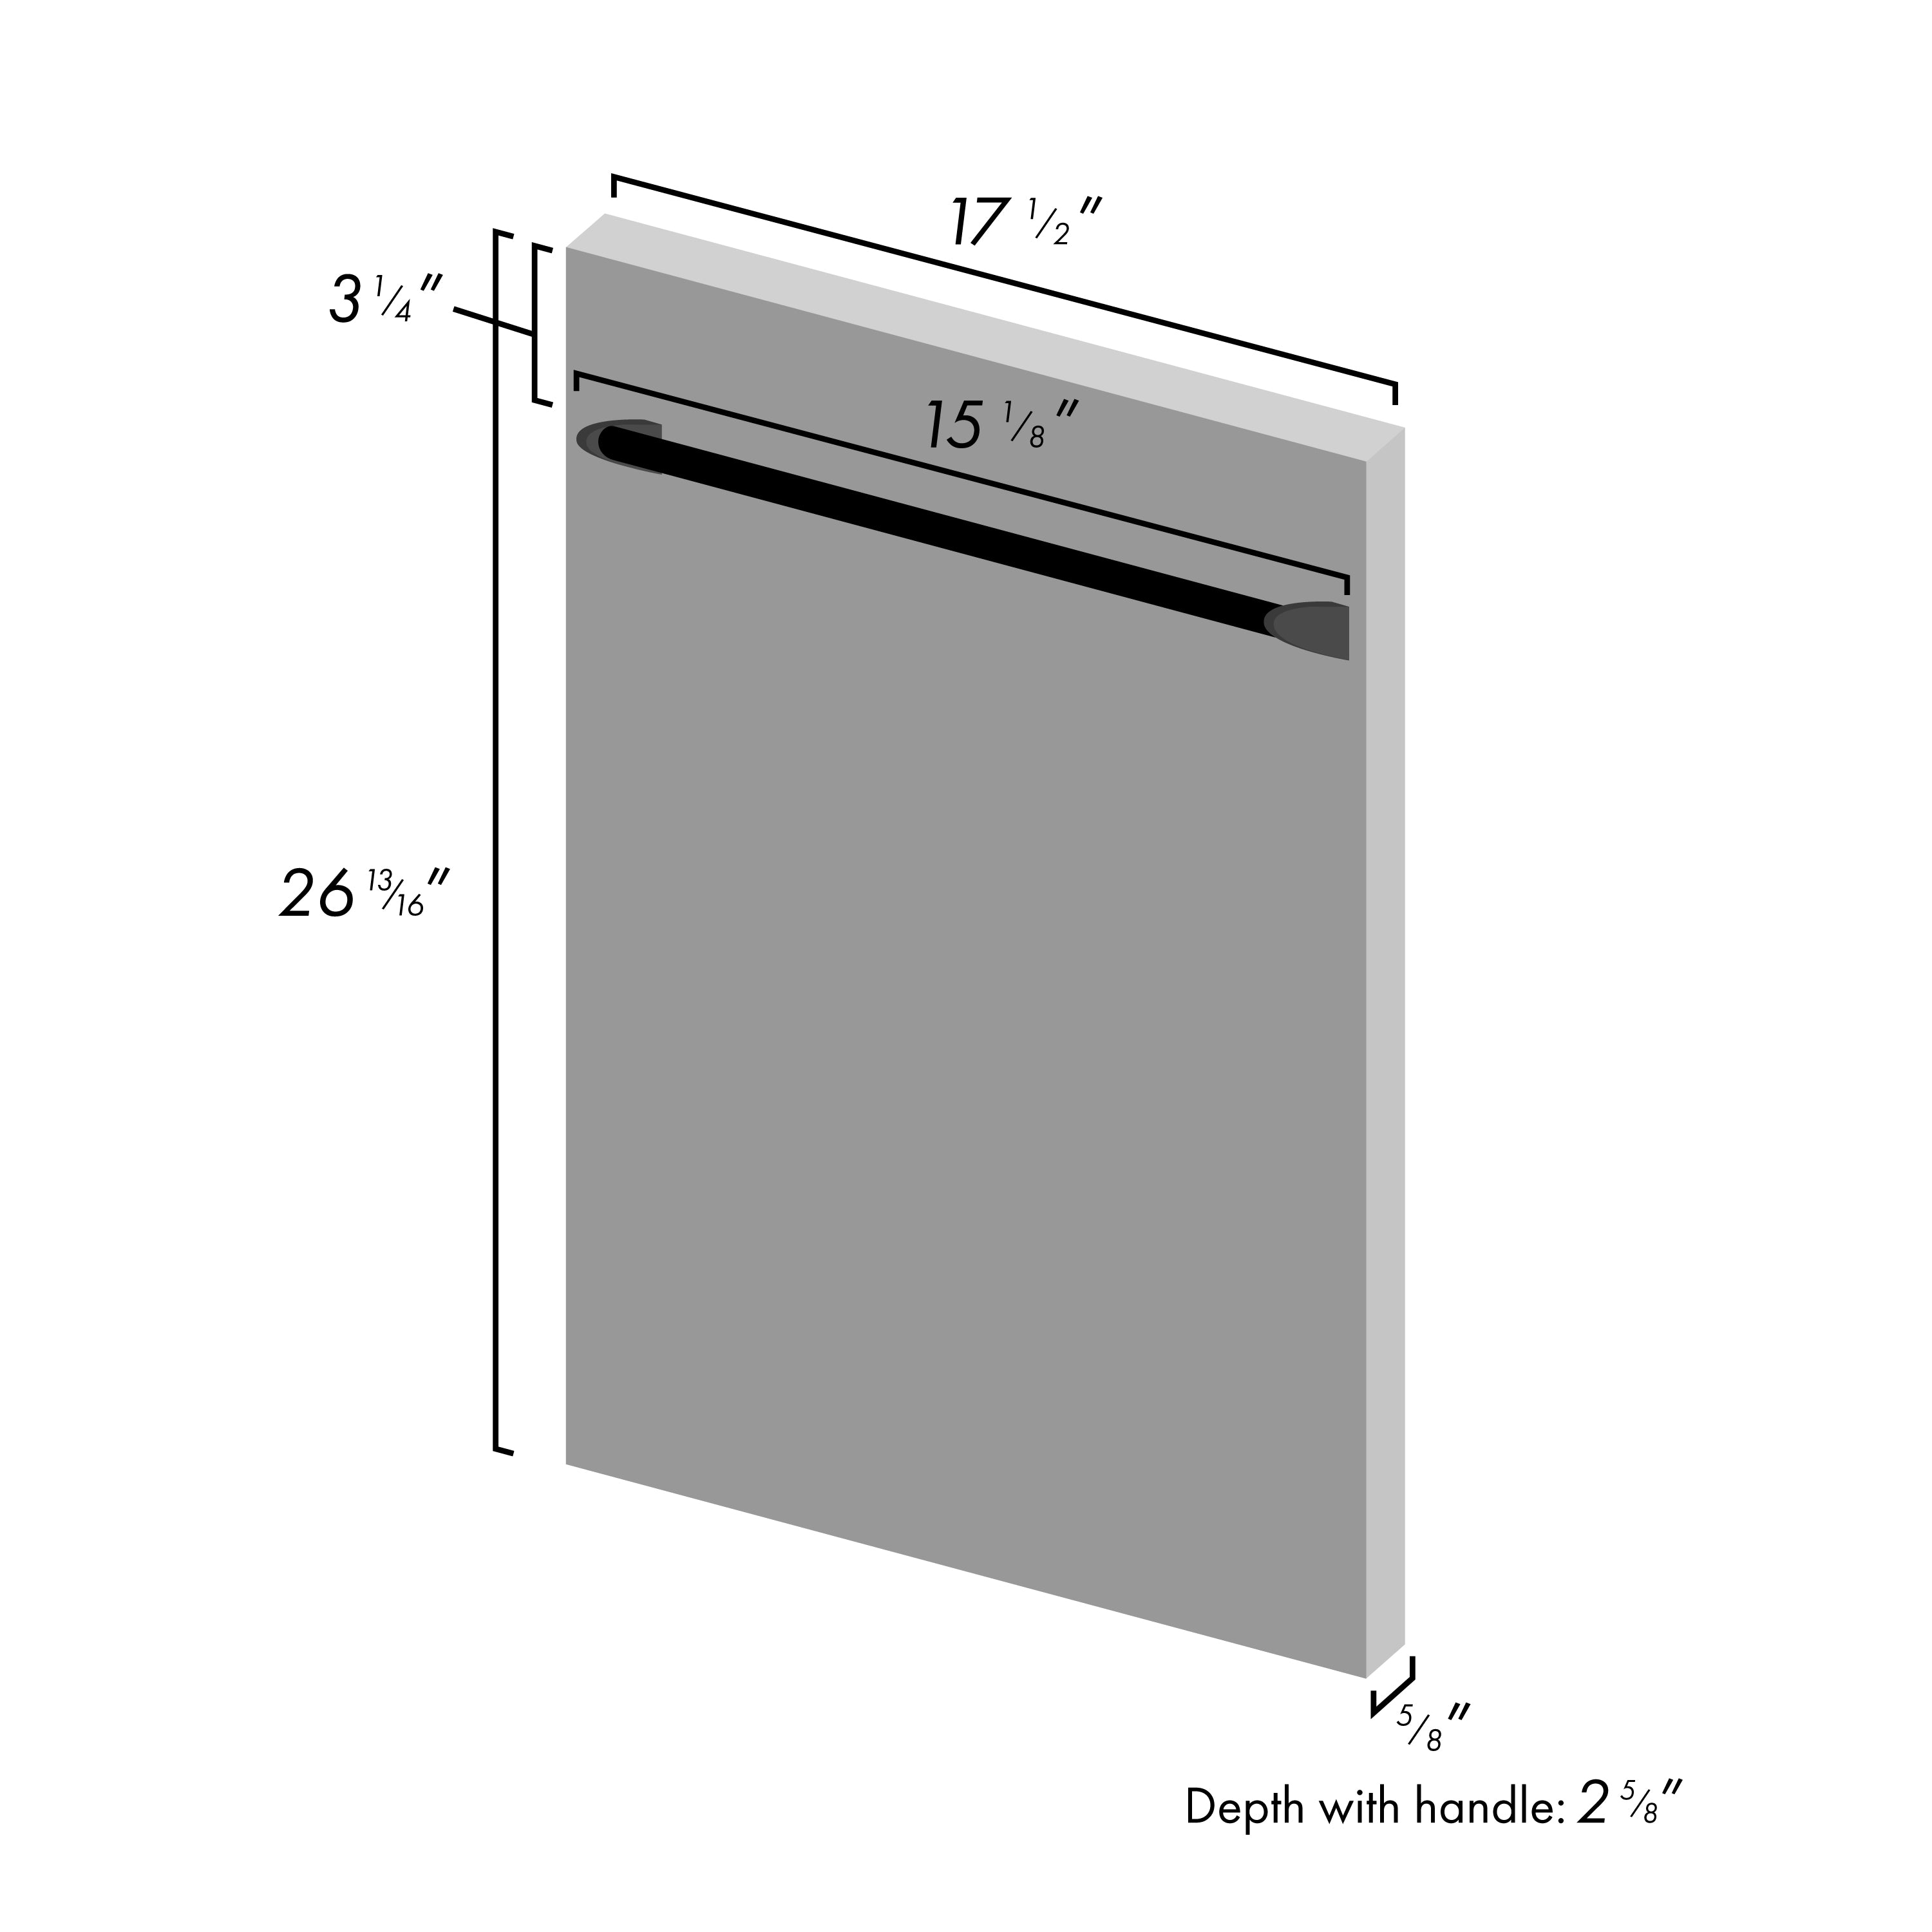 ZLINE 18" Dishwasher Panel in Fingerprint Resistant Finish with Traditional Handle (DP-SN-H-18)